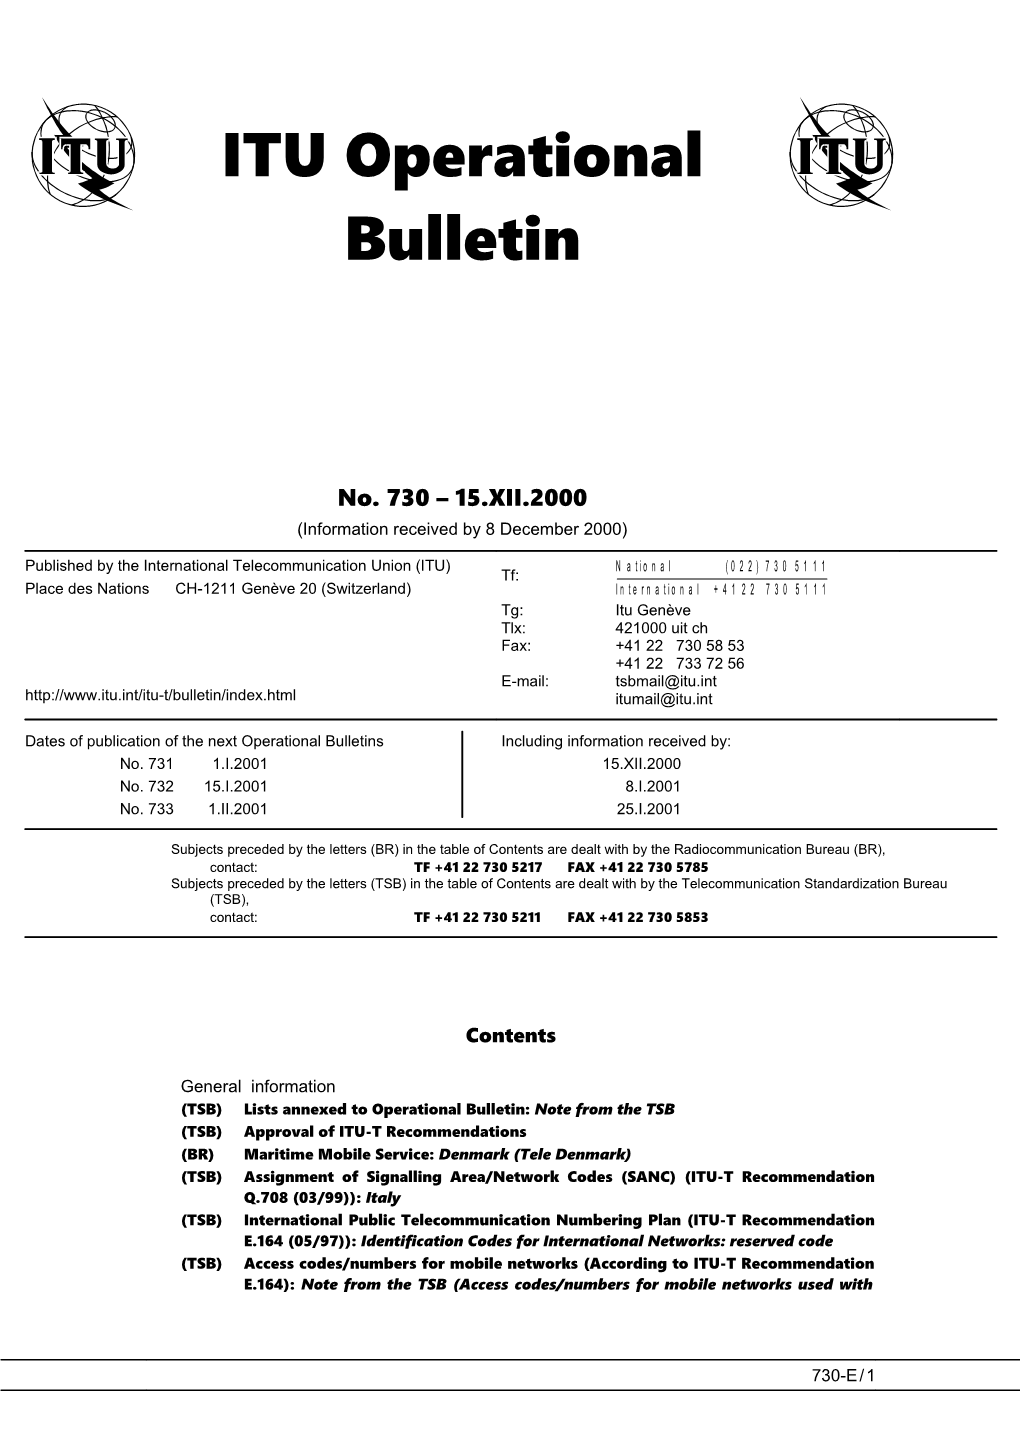 ITU Operational Bulletin 730 - 15.XII.2000